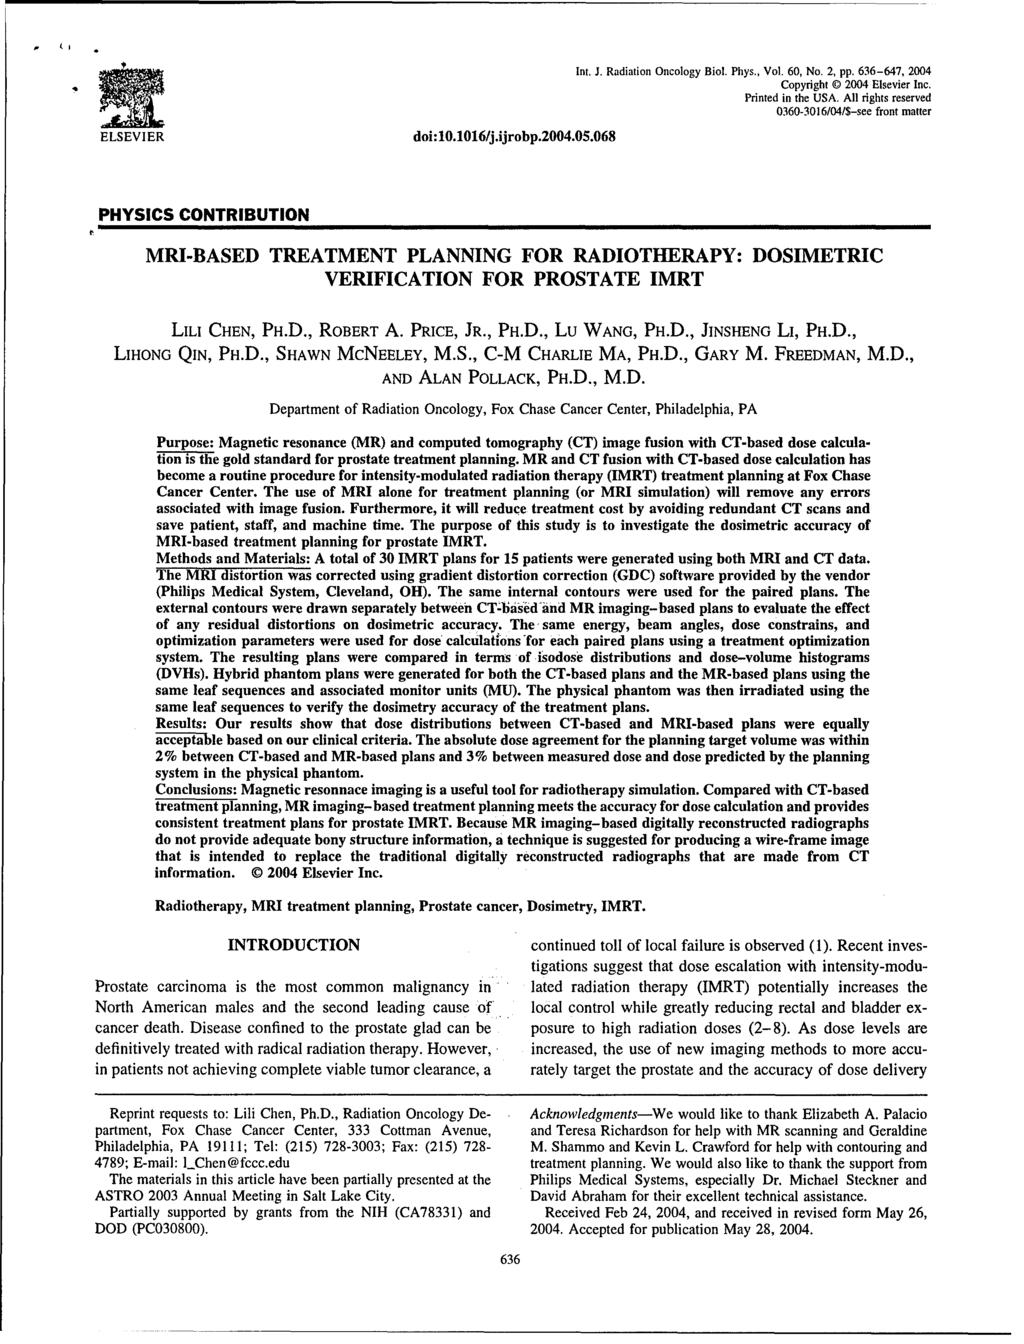 ELSEVIER doi:10.1016/j.ijrobp.2004.05.068 Int. J. Radiation Oncology Biol. Phys., Vol. 60, No. 2, pp. 636-647, 2004 Copyright 2004 Elsevier Inc. Printed in the USA.